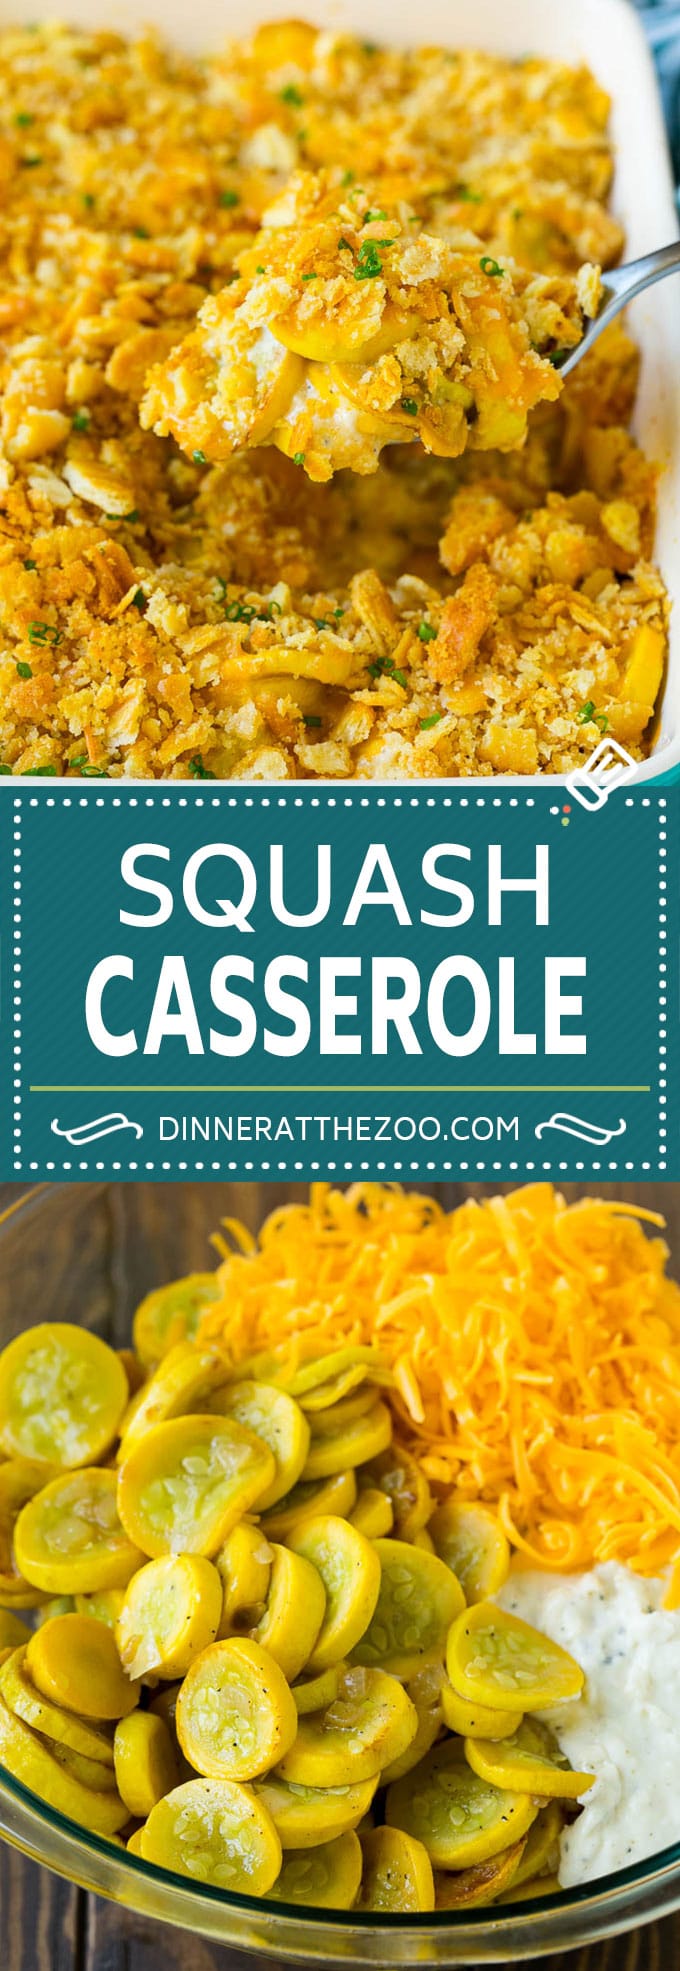 Squash Casserole Recipe | Vegetable Casserole | Zucchini Casserole #casserole #squash #zucchini #cheese #sidedish #dinneratthezoo